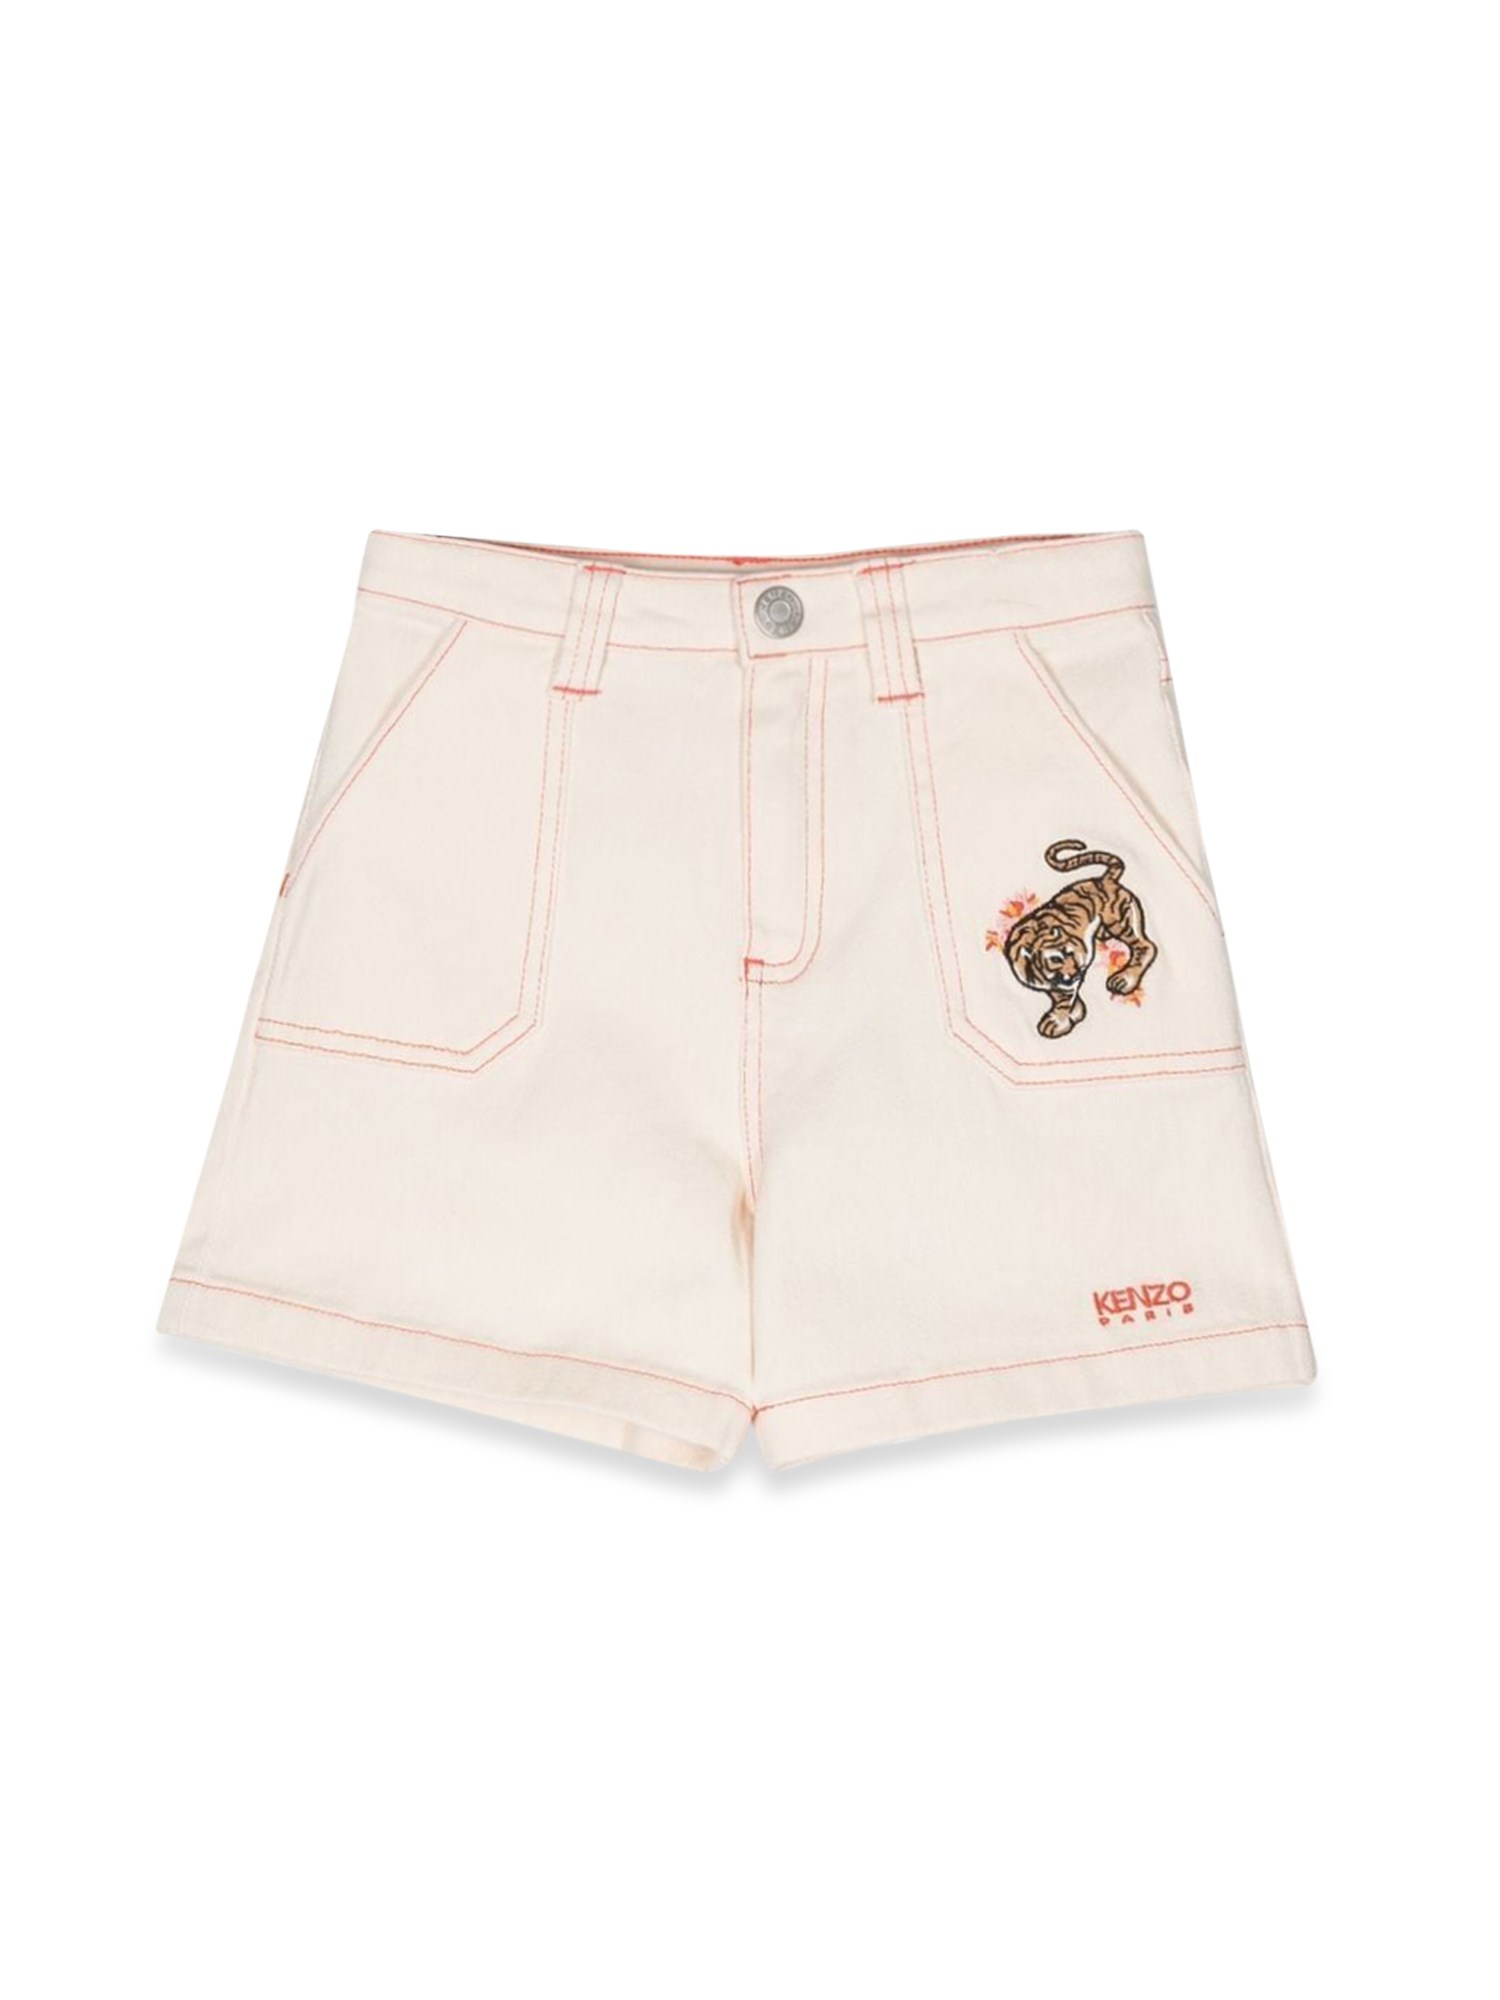 kenzo tiger shorts